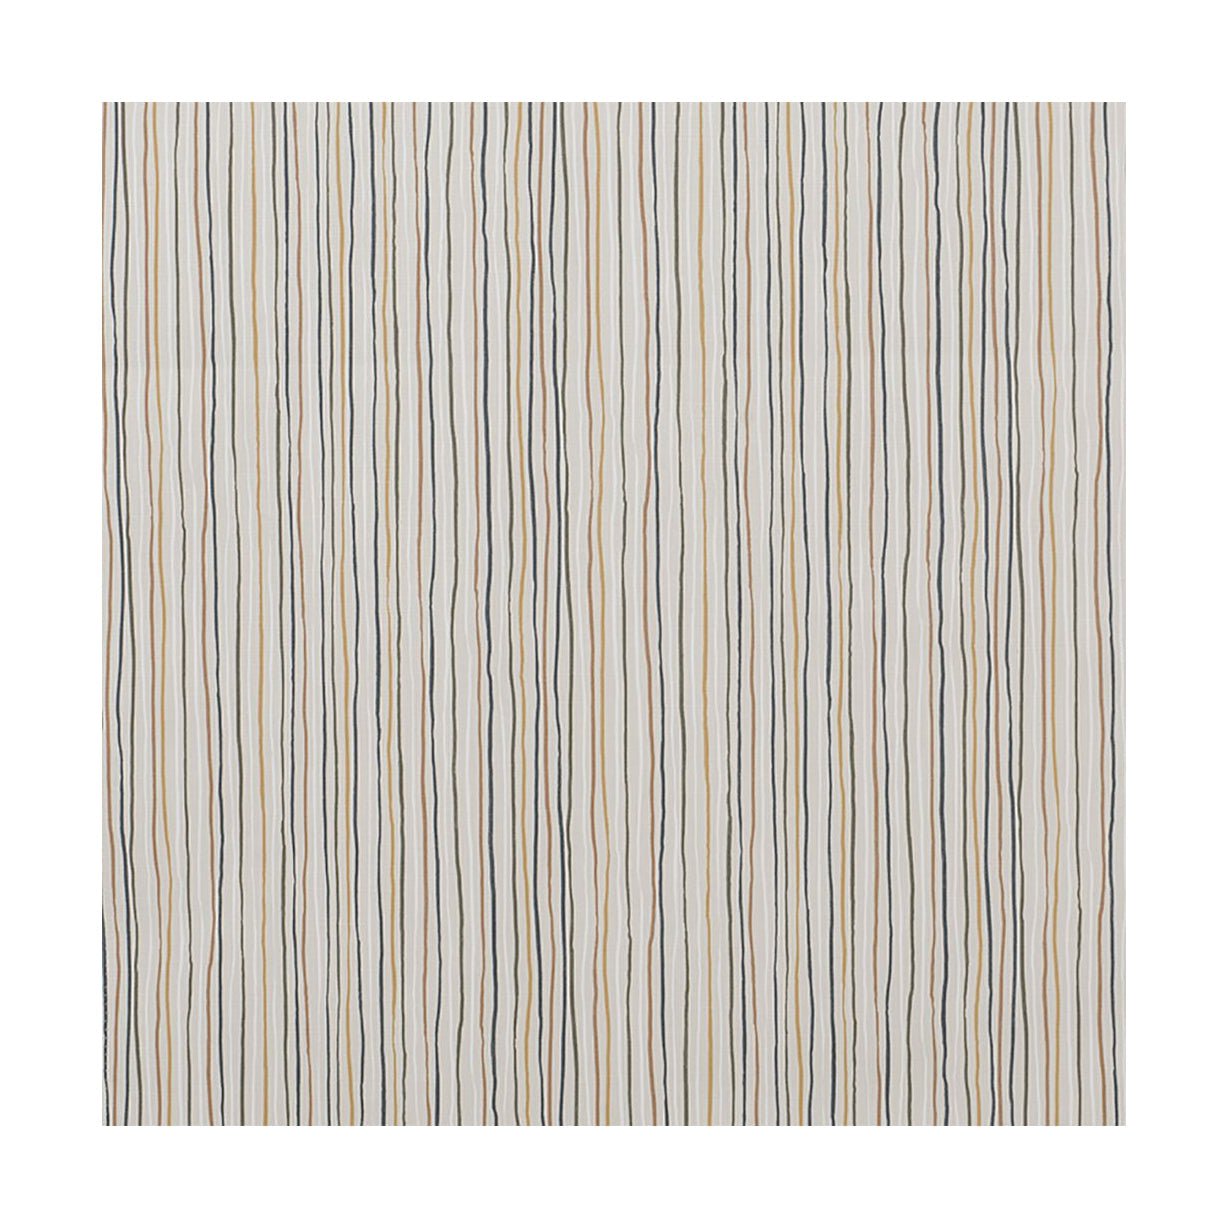 Spira Stripe CTC -stoff med akrylbredde 145 cm (pris per meter), flerfarget